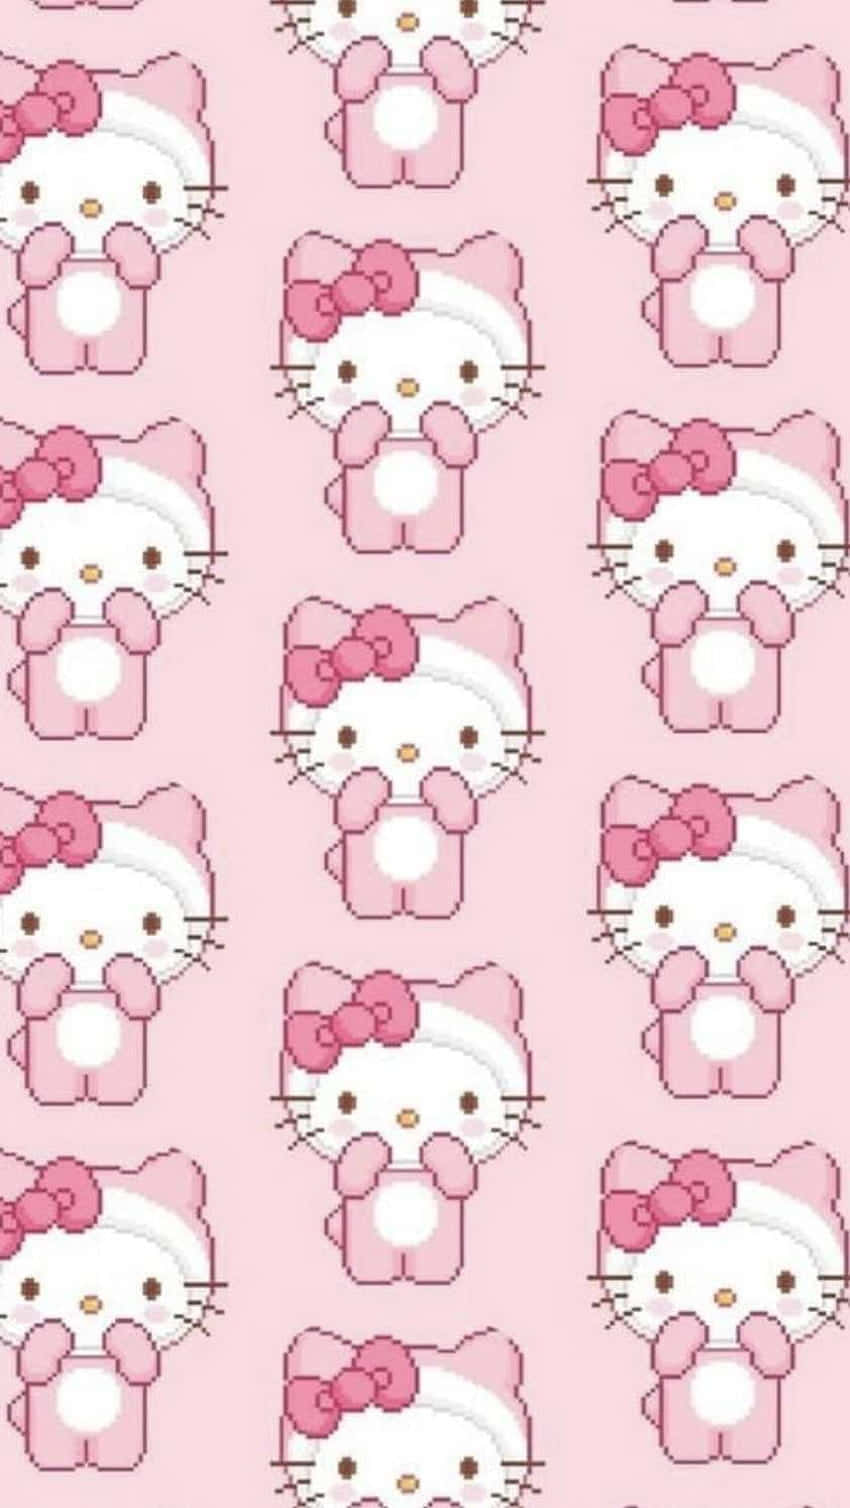 Say "Hello" to Emo Hello Kitty Wallpaper